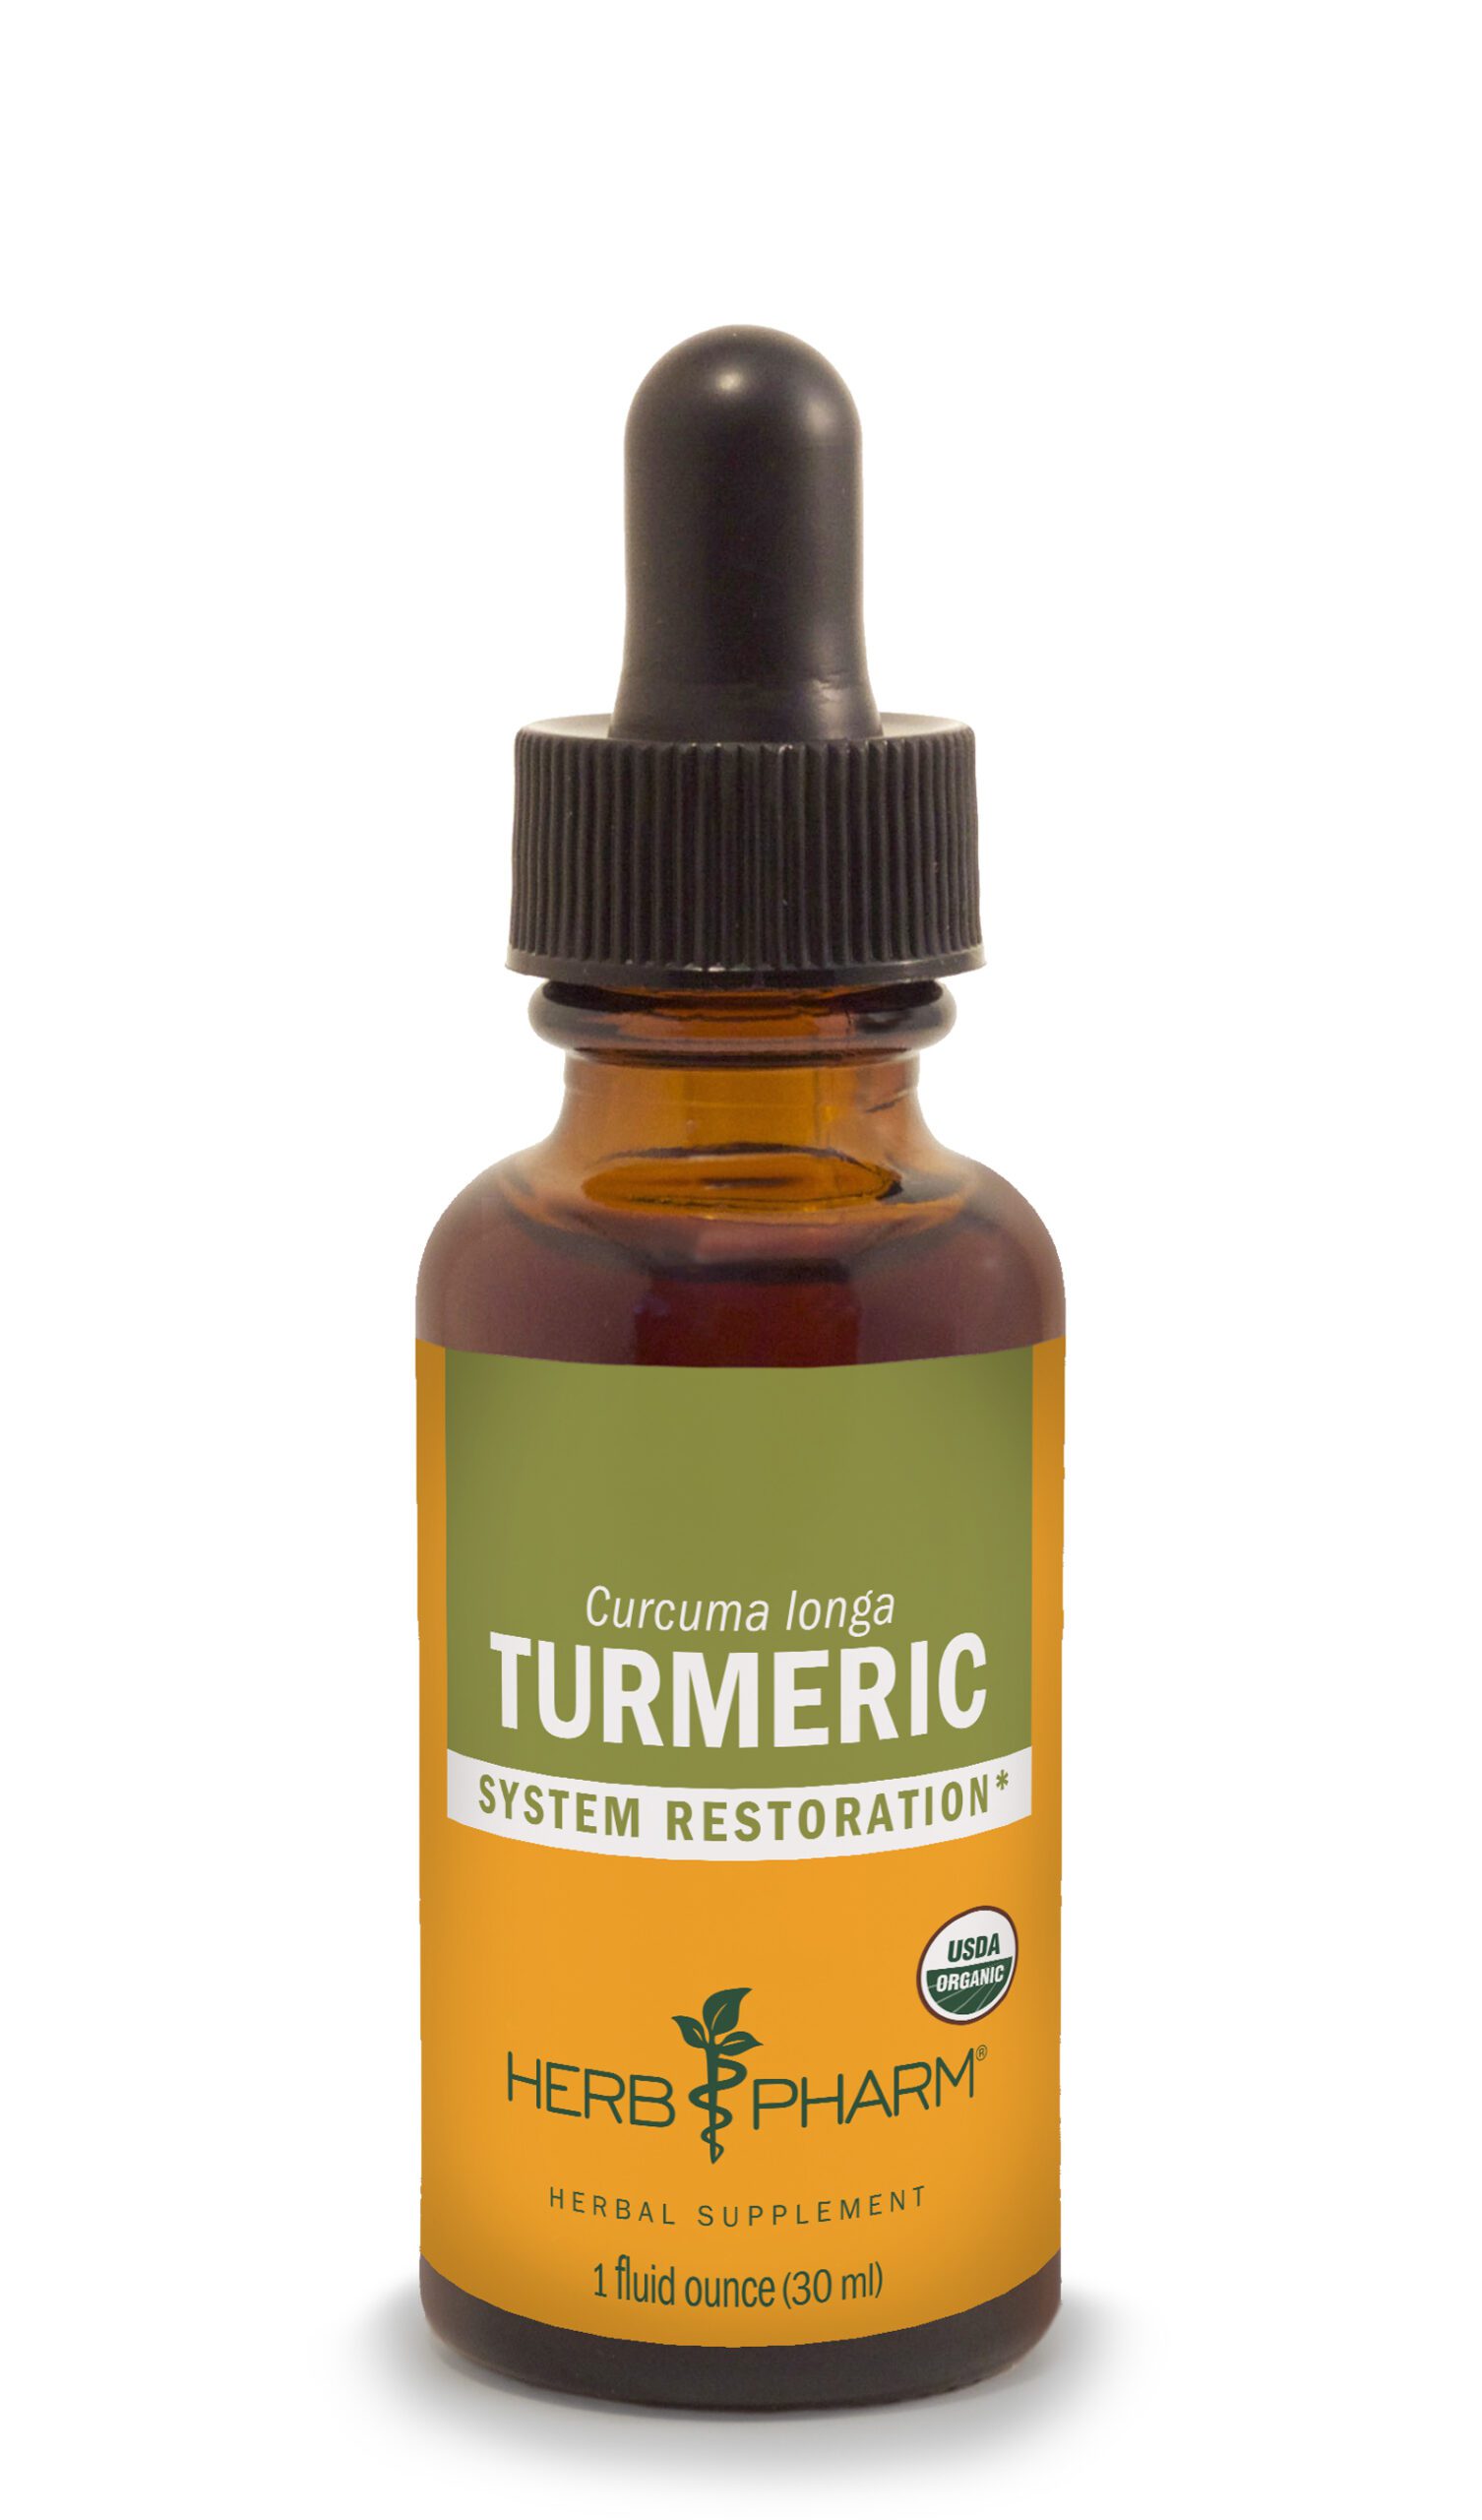 Product Listing Image for Herb Pharm Turmeric Tincture 1oz